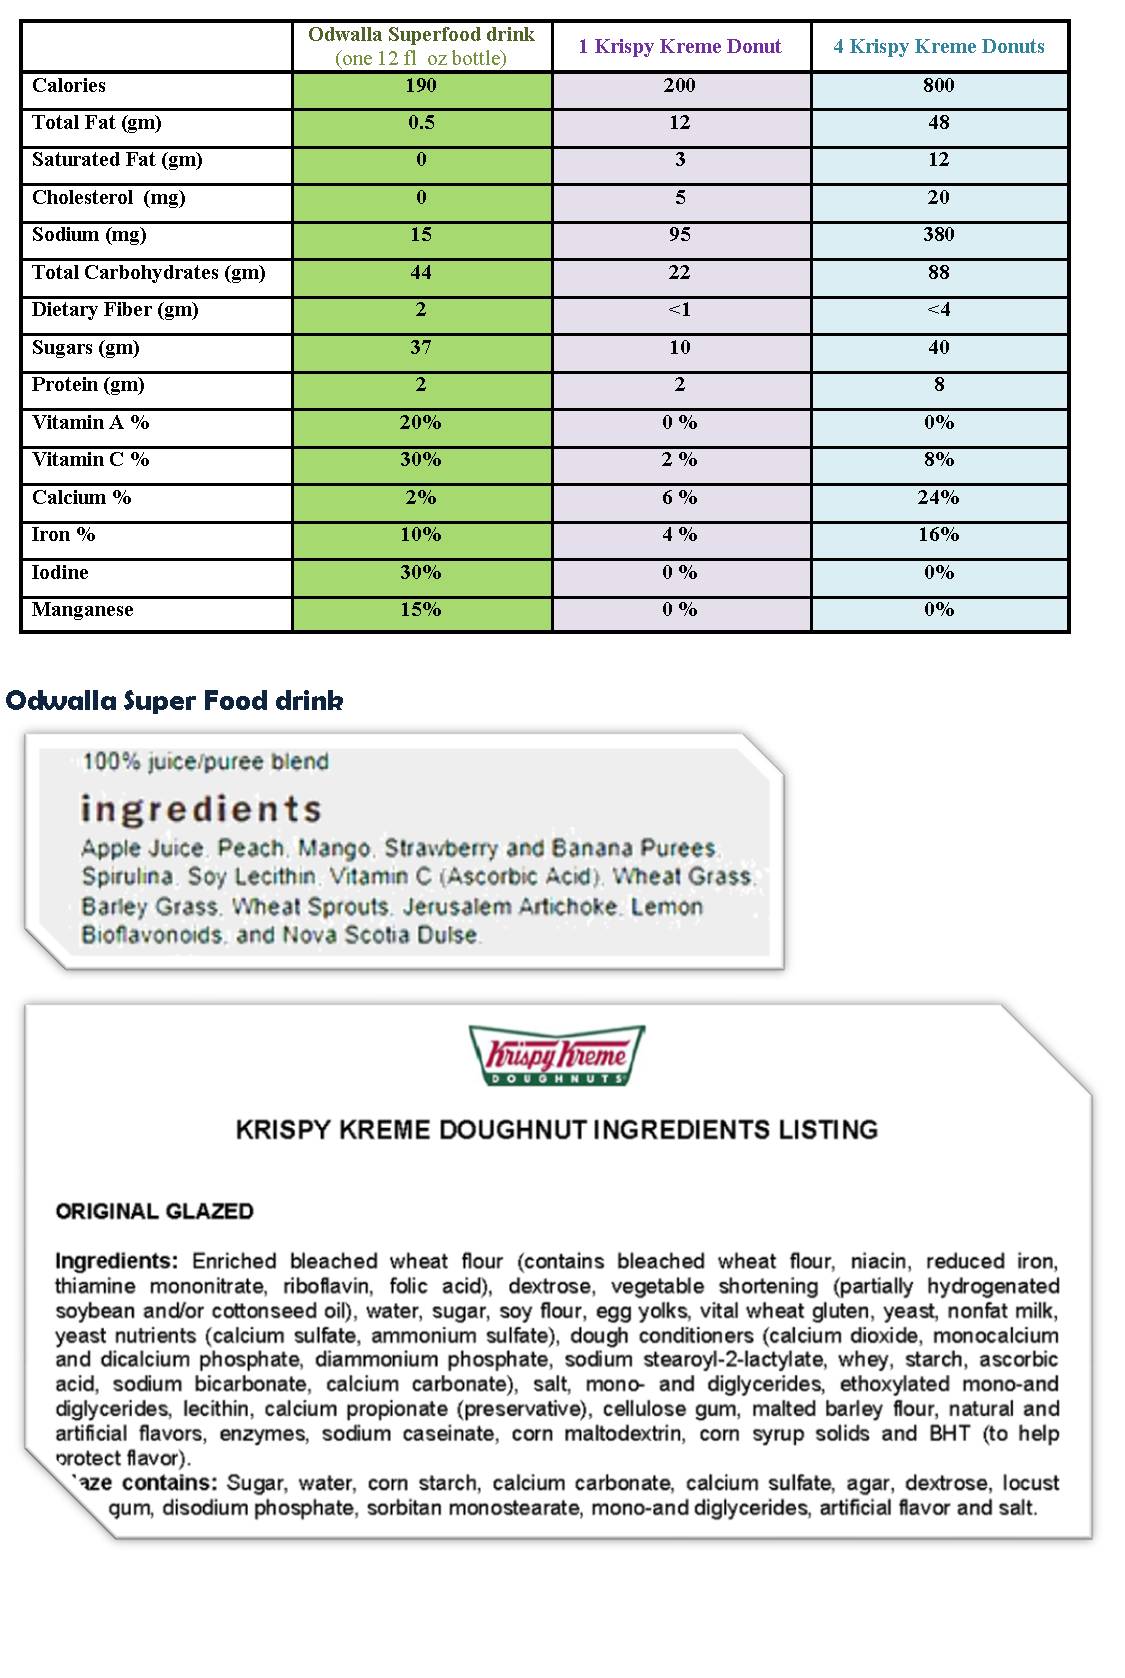 Krispy Kreme Nutritional Chart